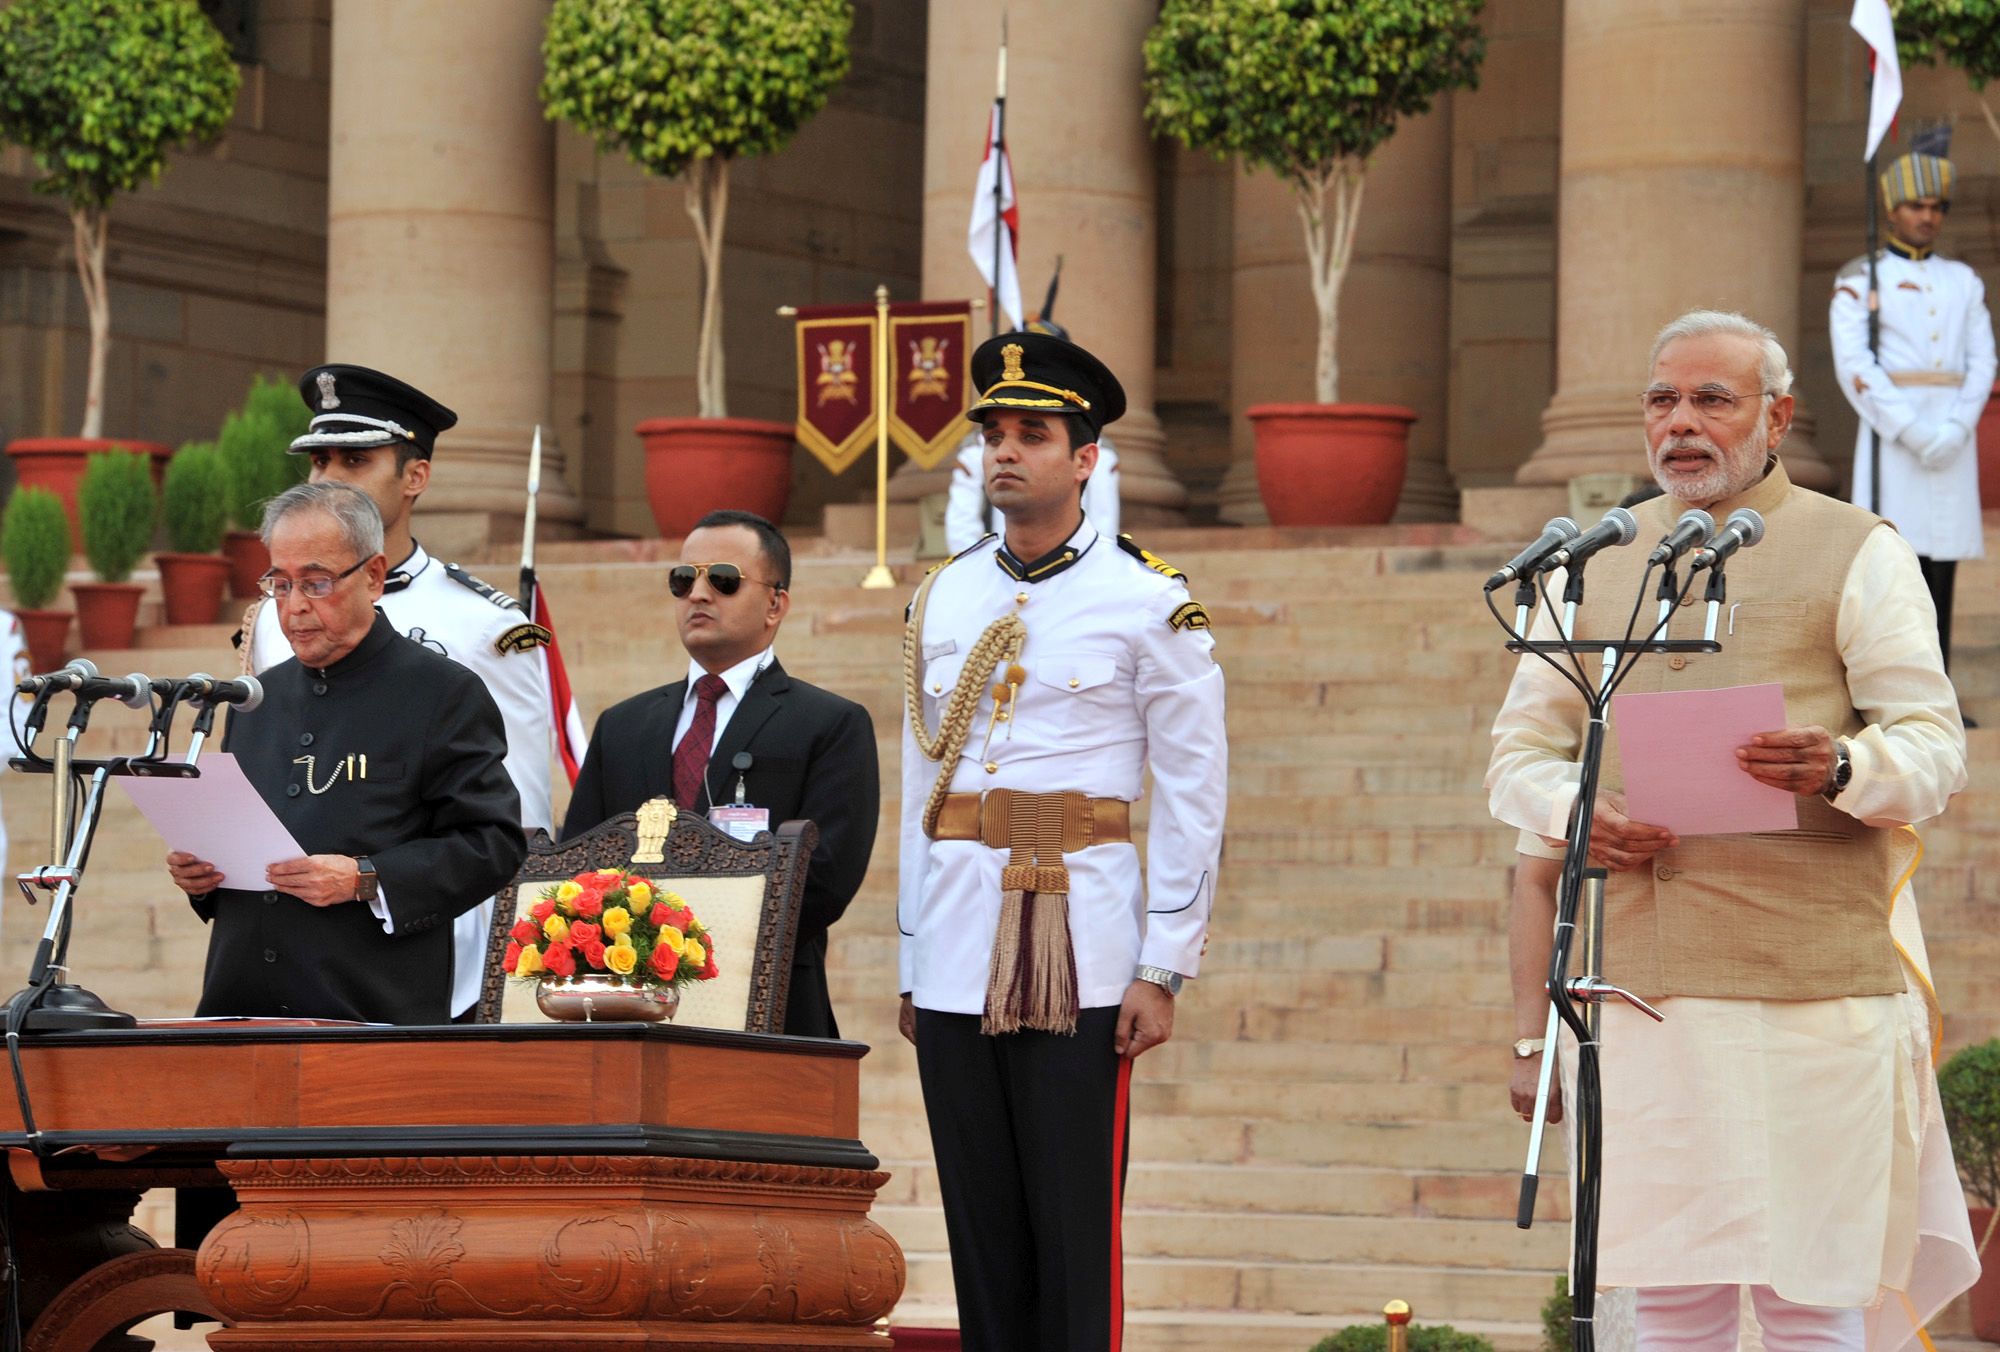 The President, Shri Pranab Mukherjee administering the oath of office of the Prime Minister to Shri Narendra Modi, at a Swearing-in Ceremony, at Rashtrapati Bhavan, in New Delhi on May 26, 2014.